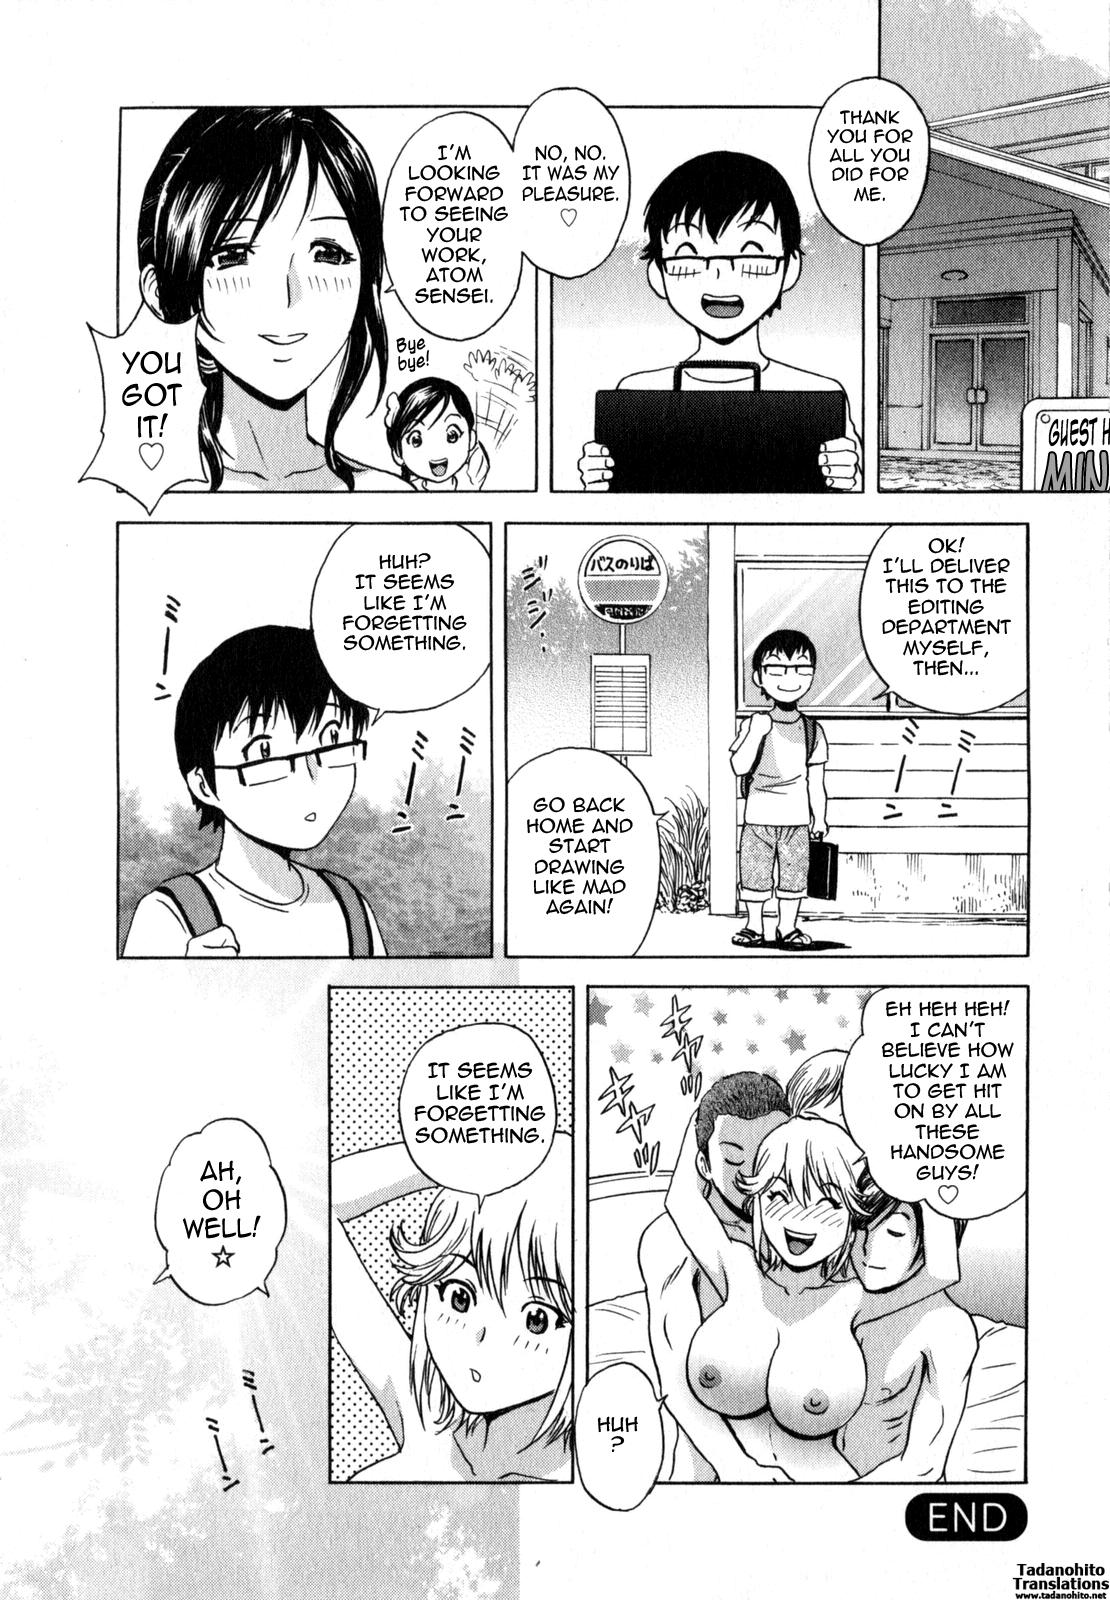 [Hidemaru] Life with Married Women Just Like a Manga 2 - Ch. 1-7 [English] {Tadanohito} 143